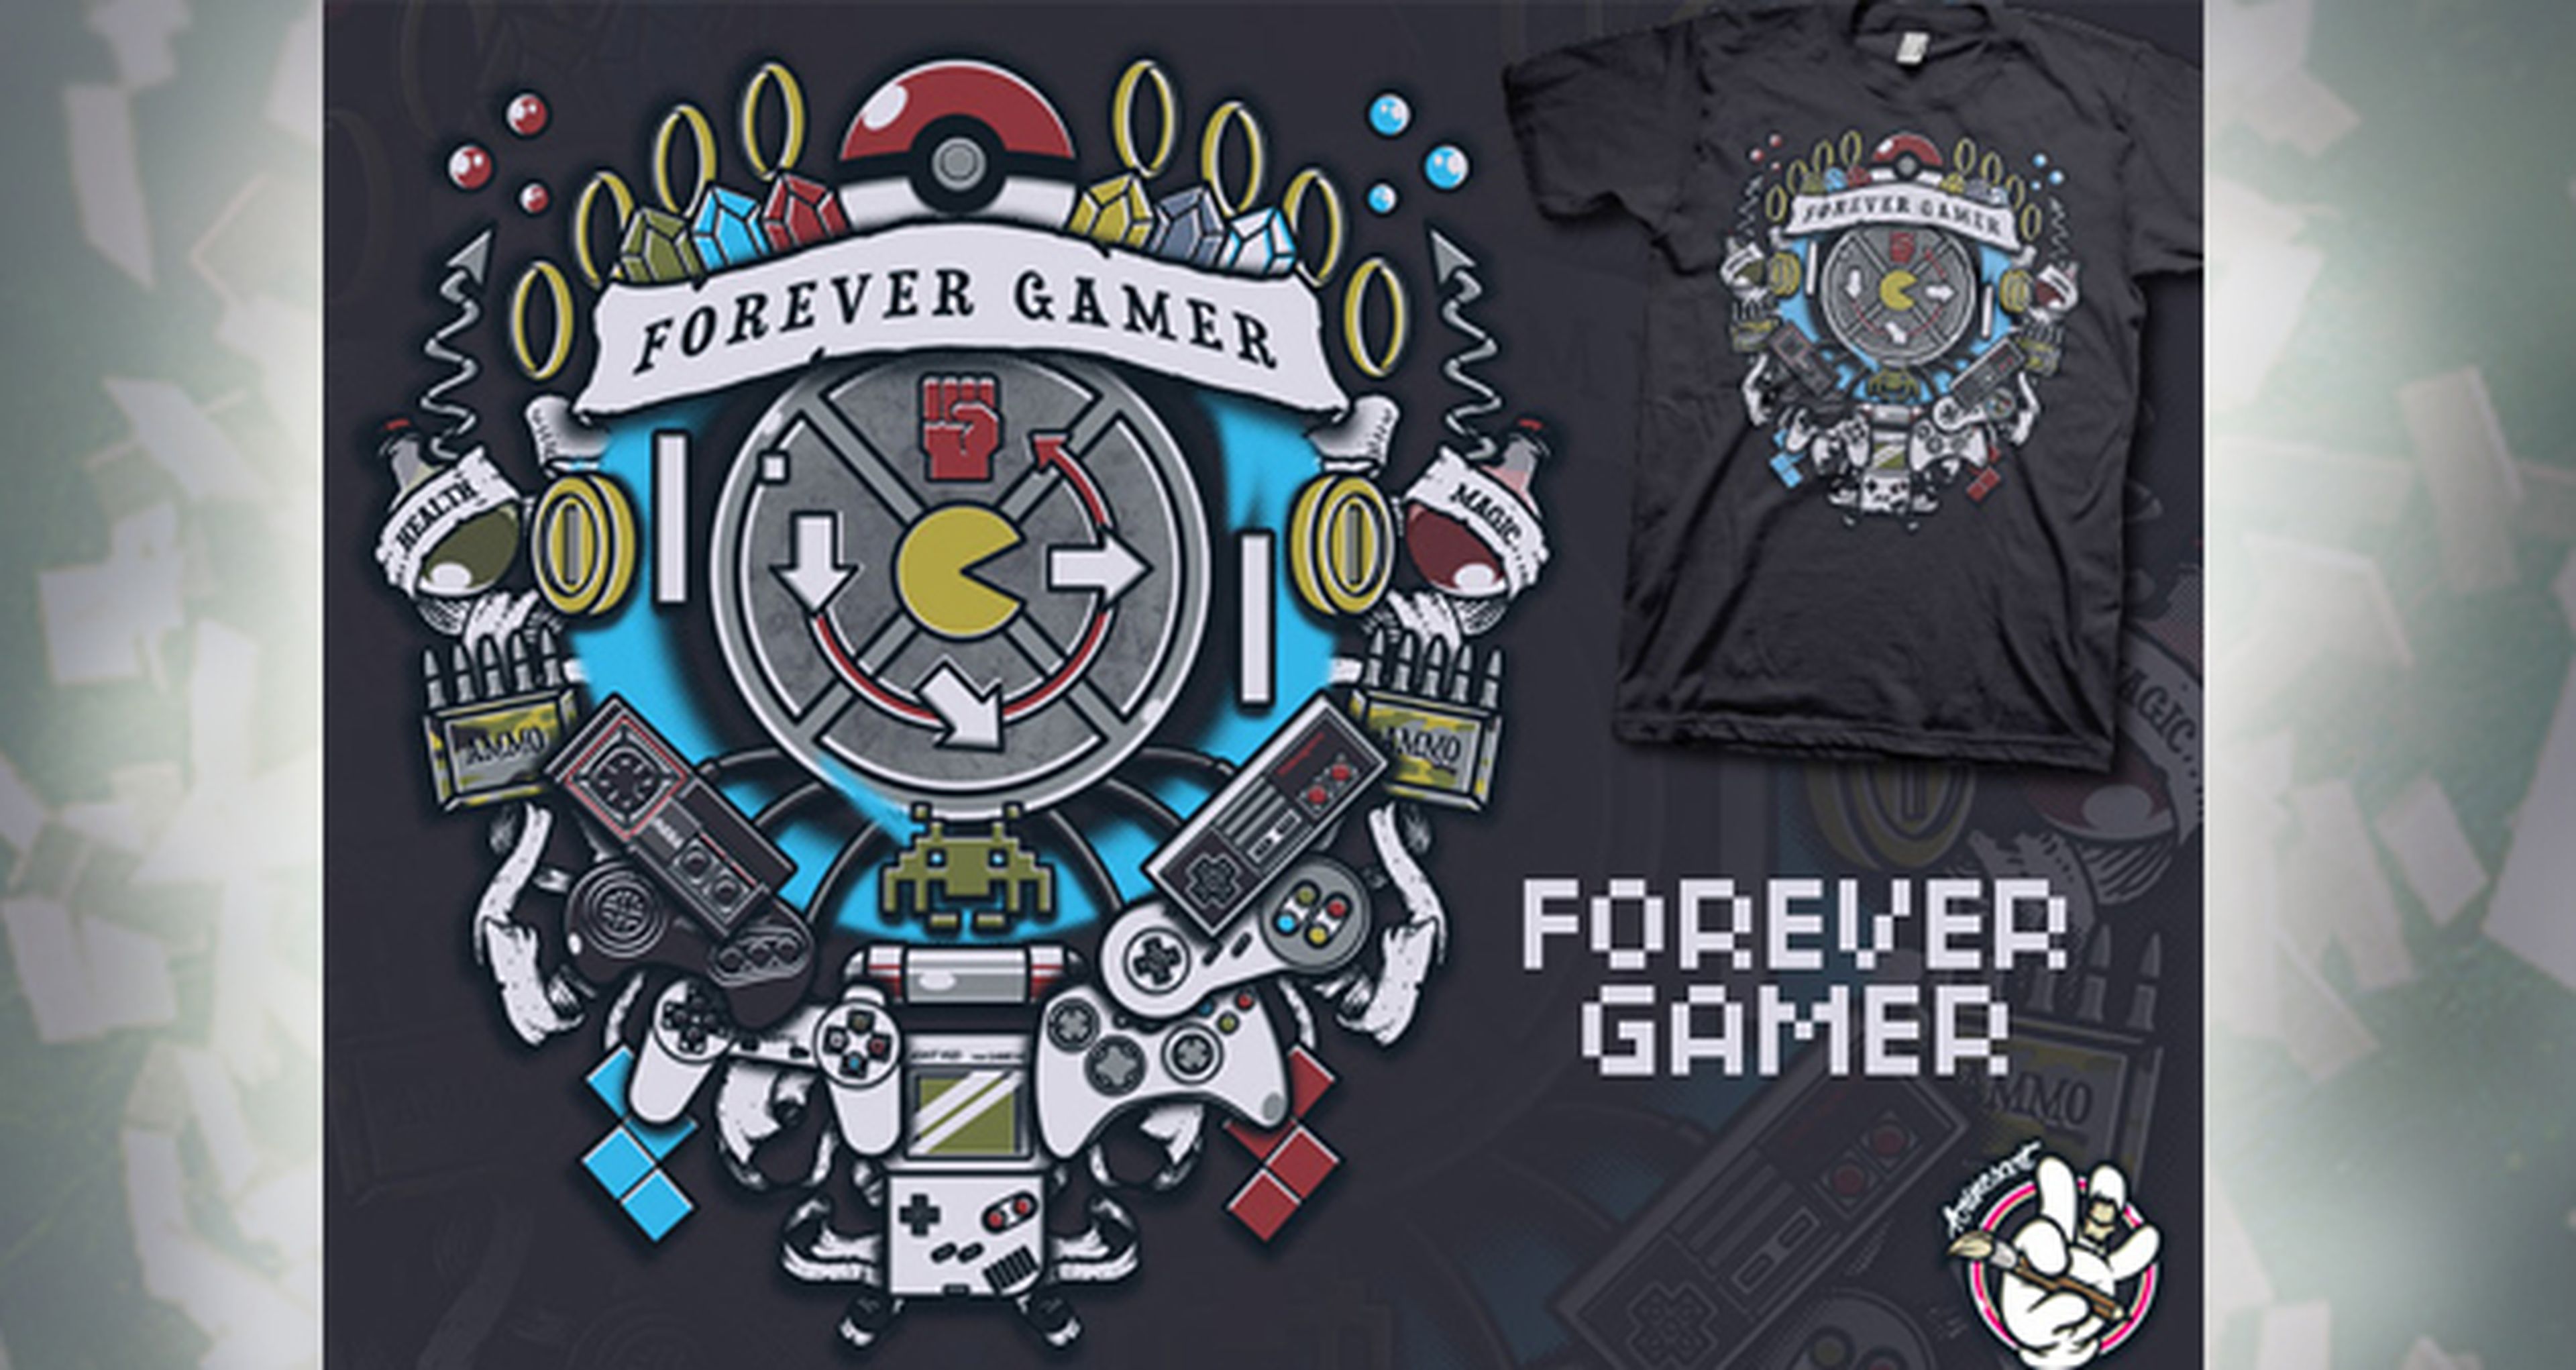 Especial Pampling: ¡Ganadores de las 25 camisetas Forever Gamer!